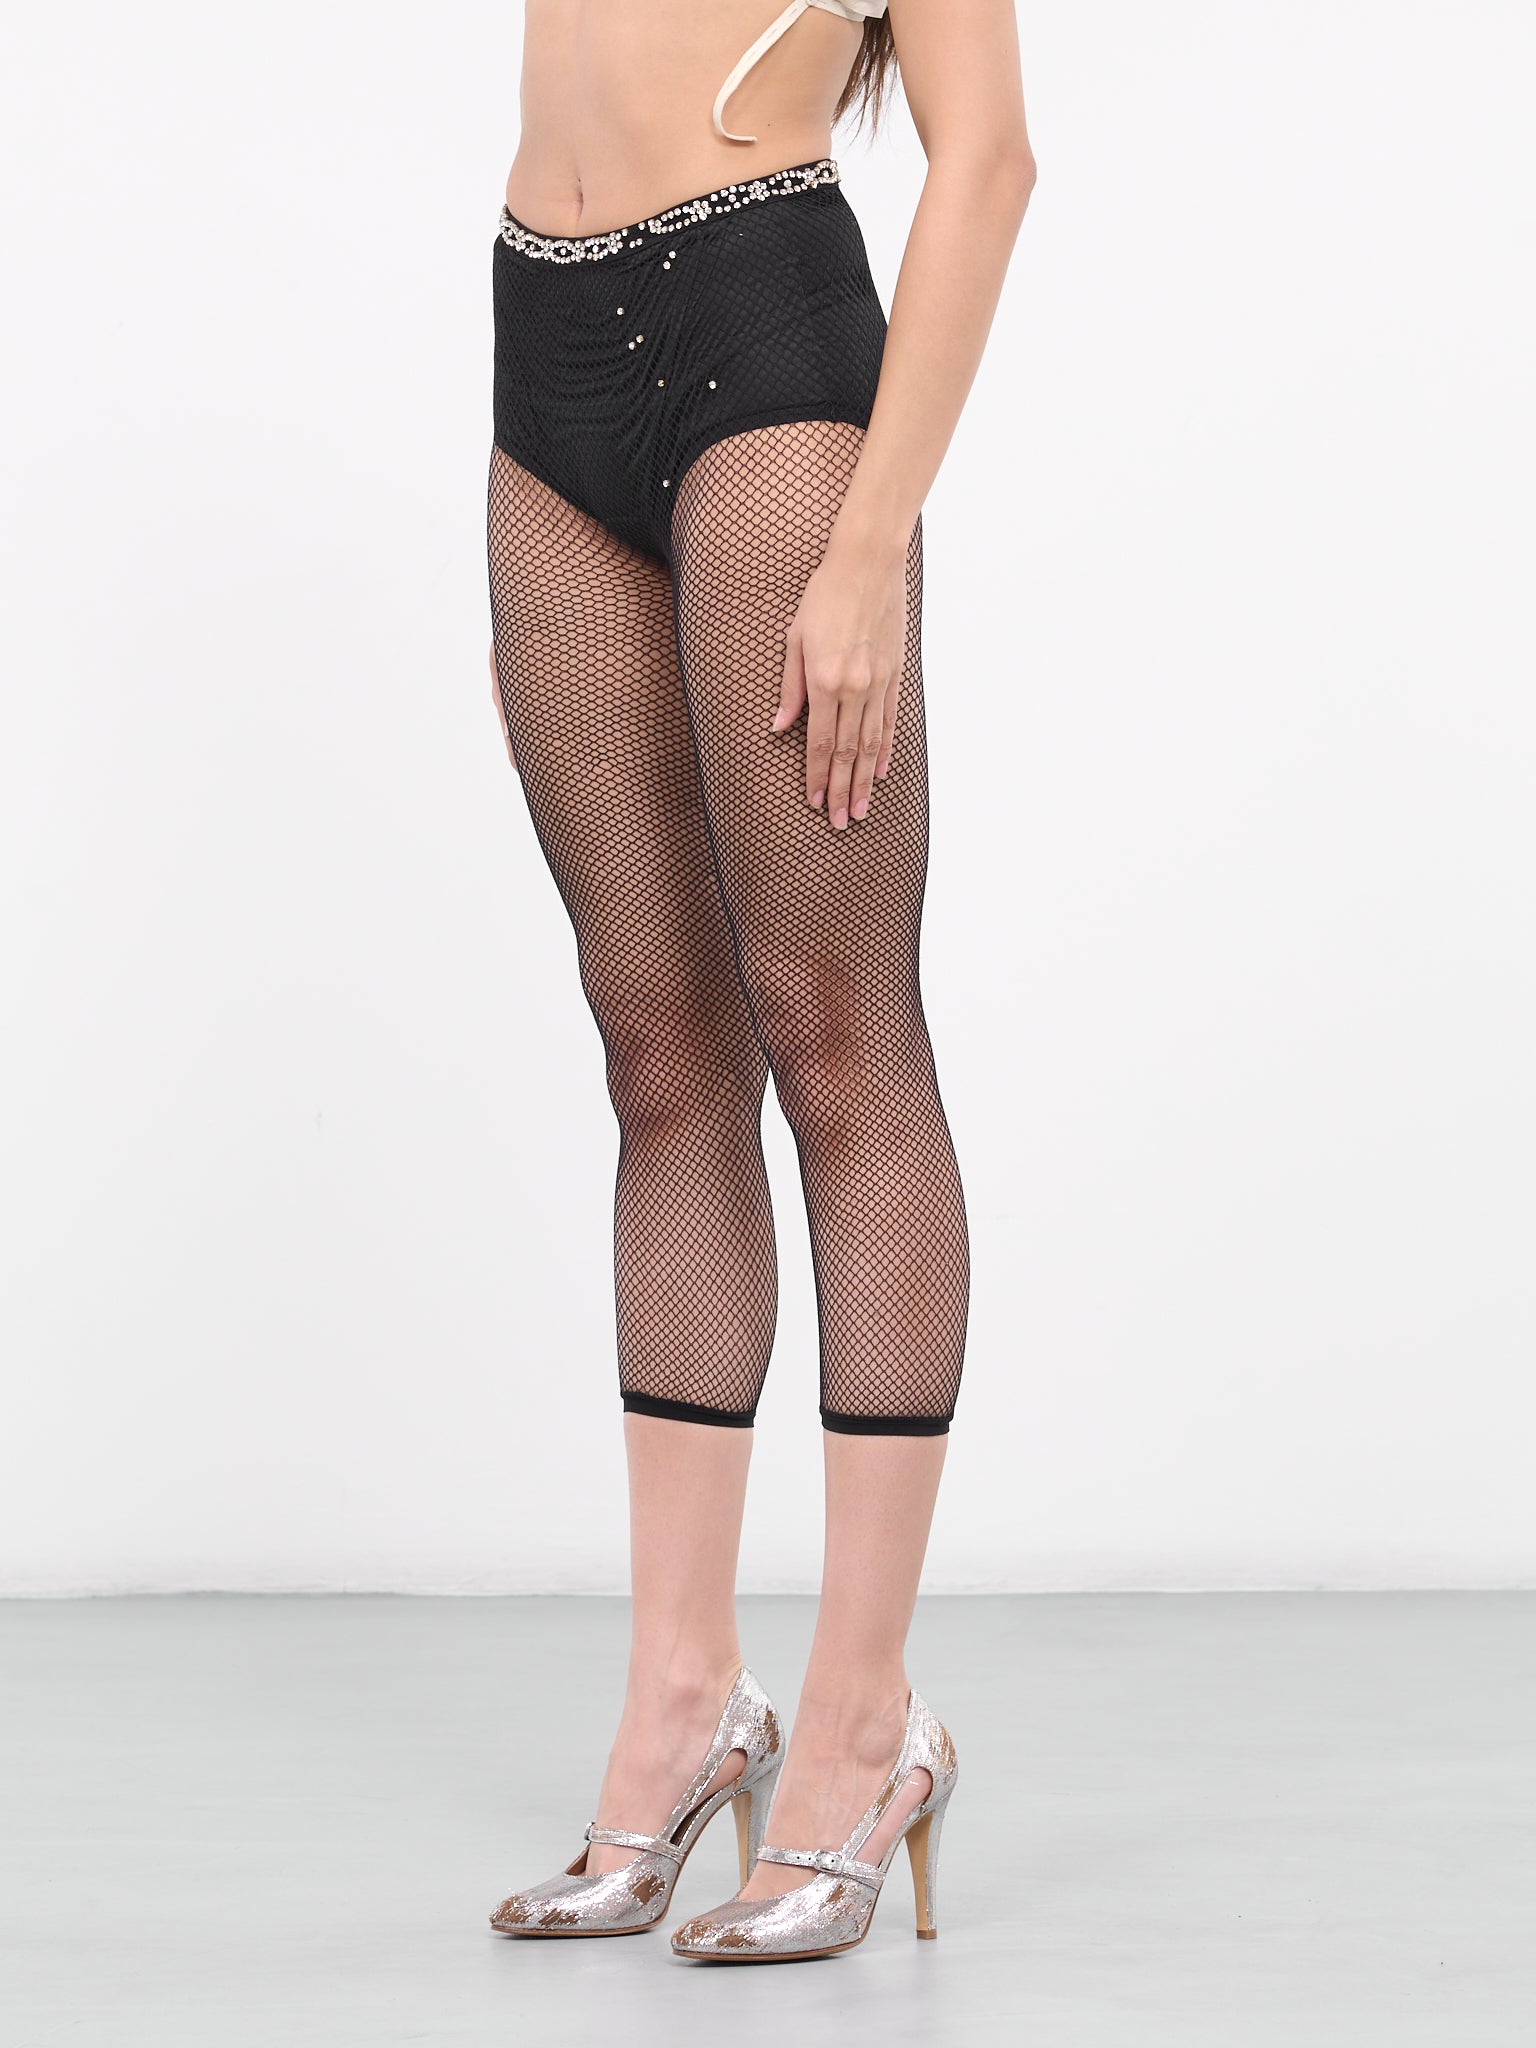 Rhinestone fishnet pantyhose black  Trendy Pants - Lush Fashion Lounge